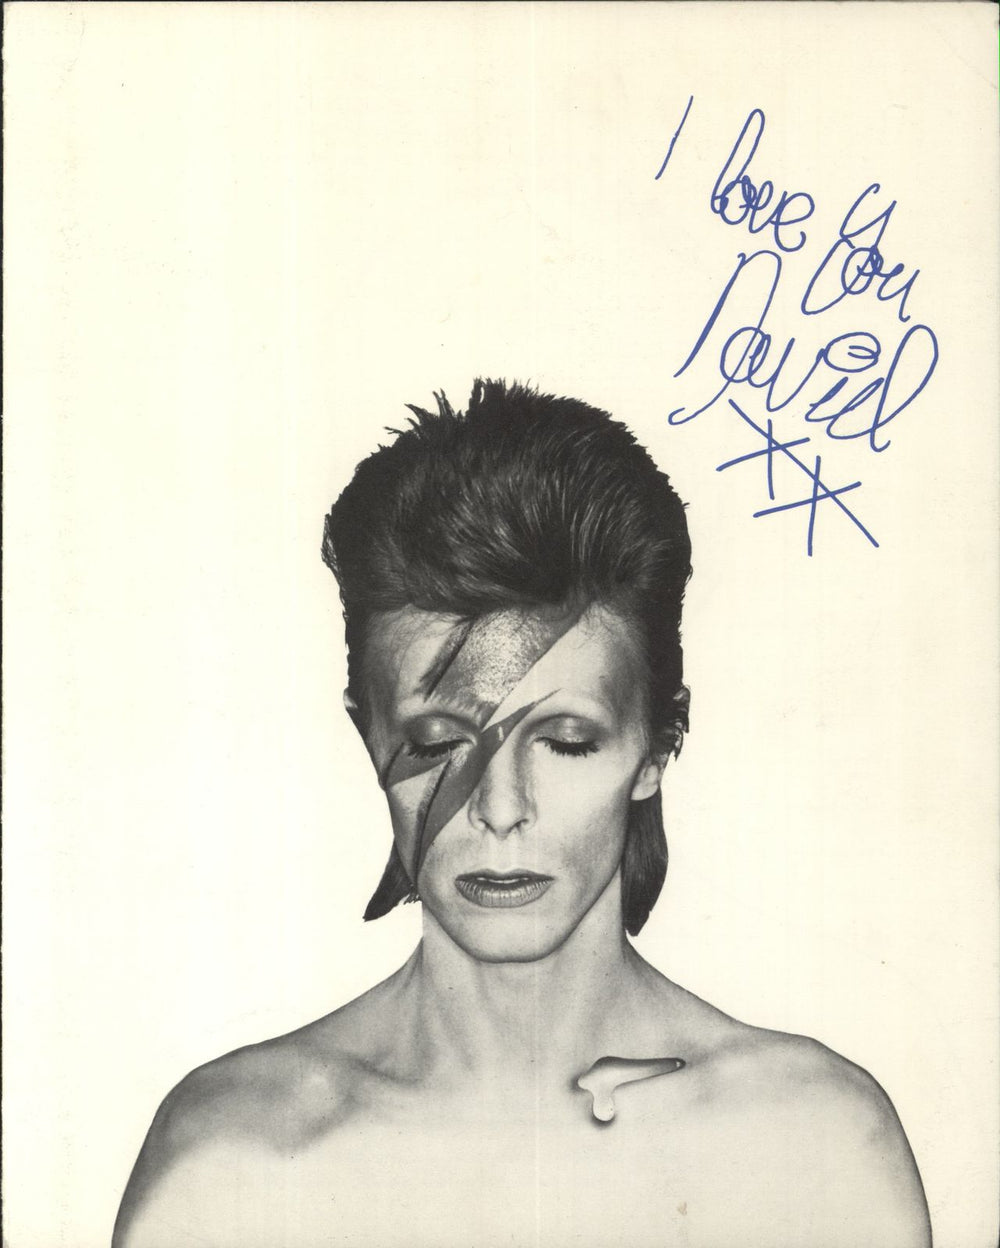 David Bowie Aladdin Sane - 1st + Insert - EX UK vinyl LP album (LP record)